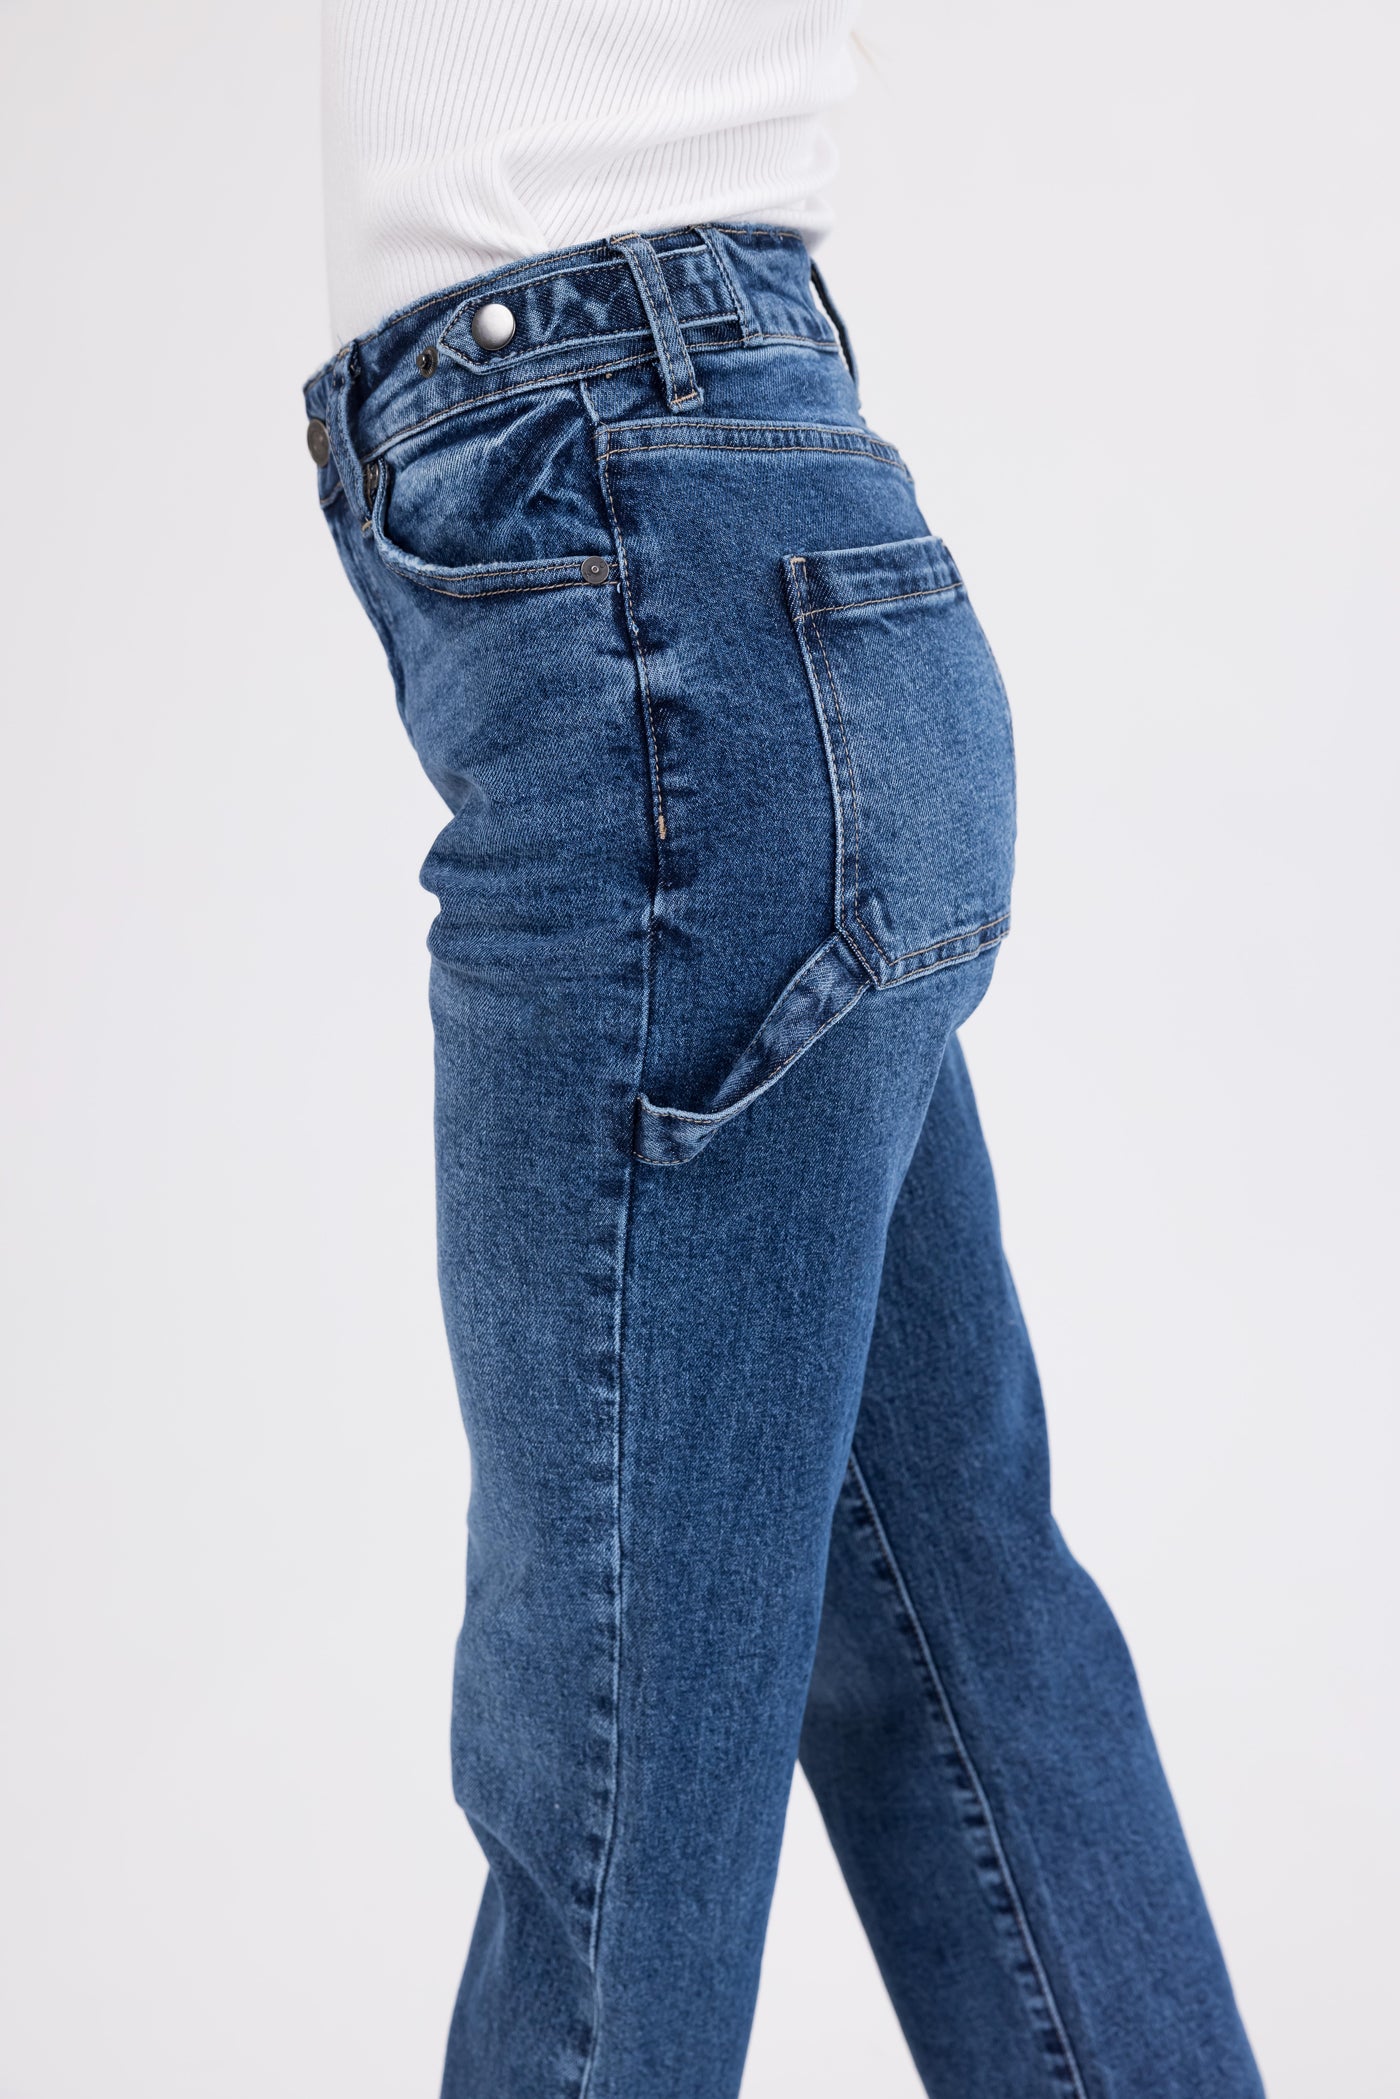 KanCan Medium Straight Leg High Rise Ankle Length Jeans